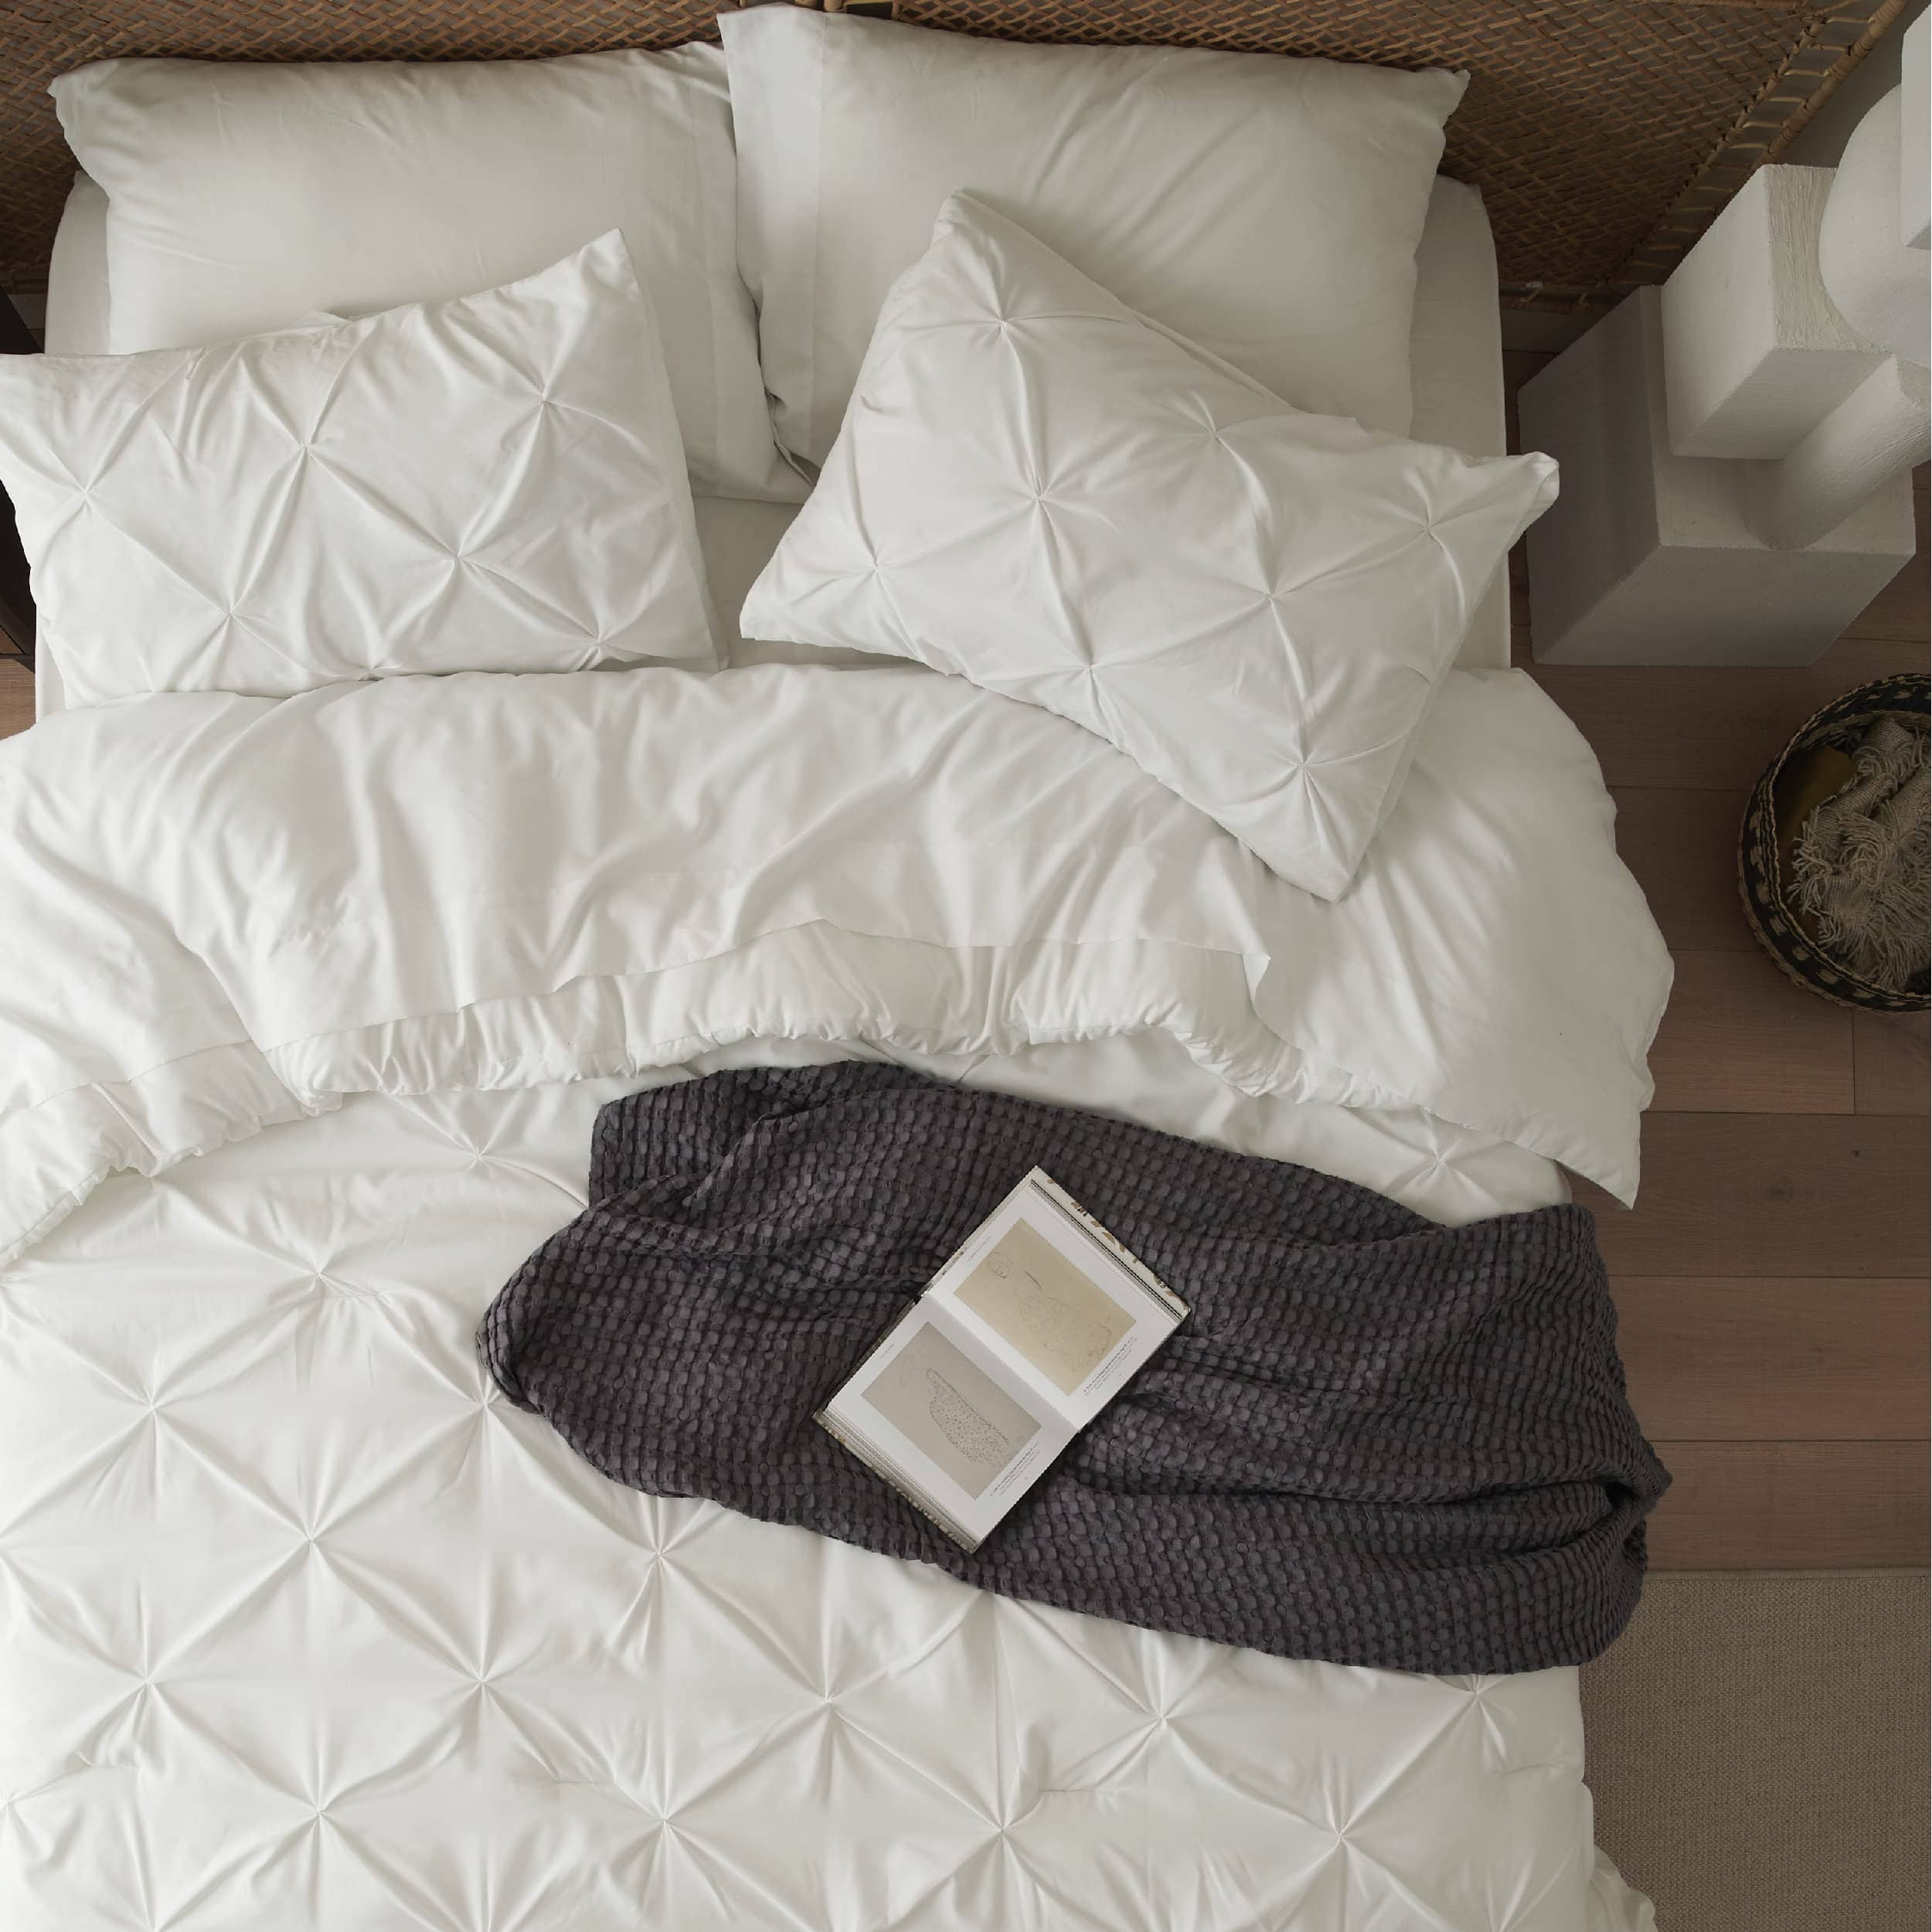 Spring Bedding Pintuck Comforter Sets